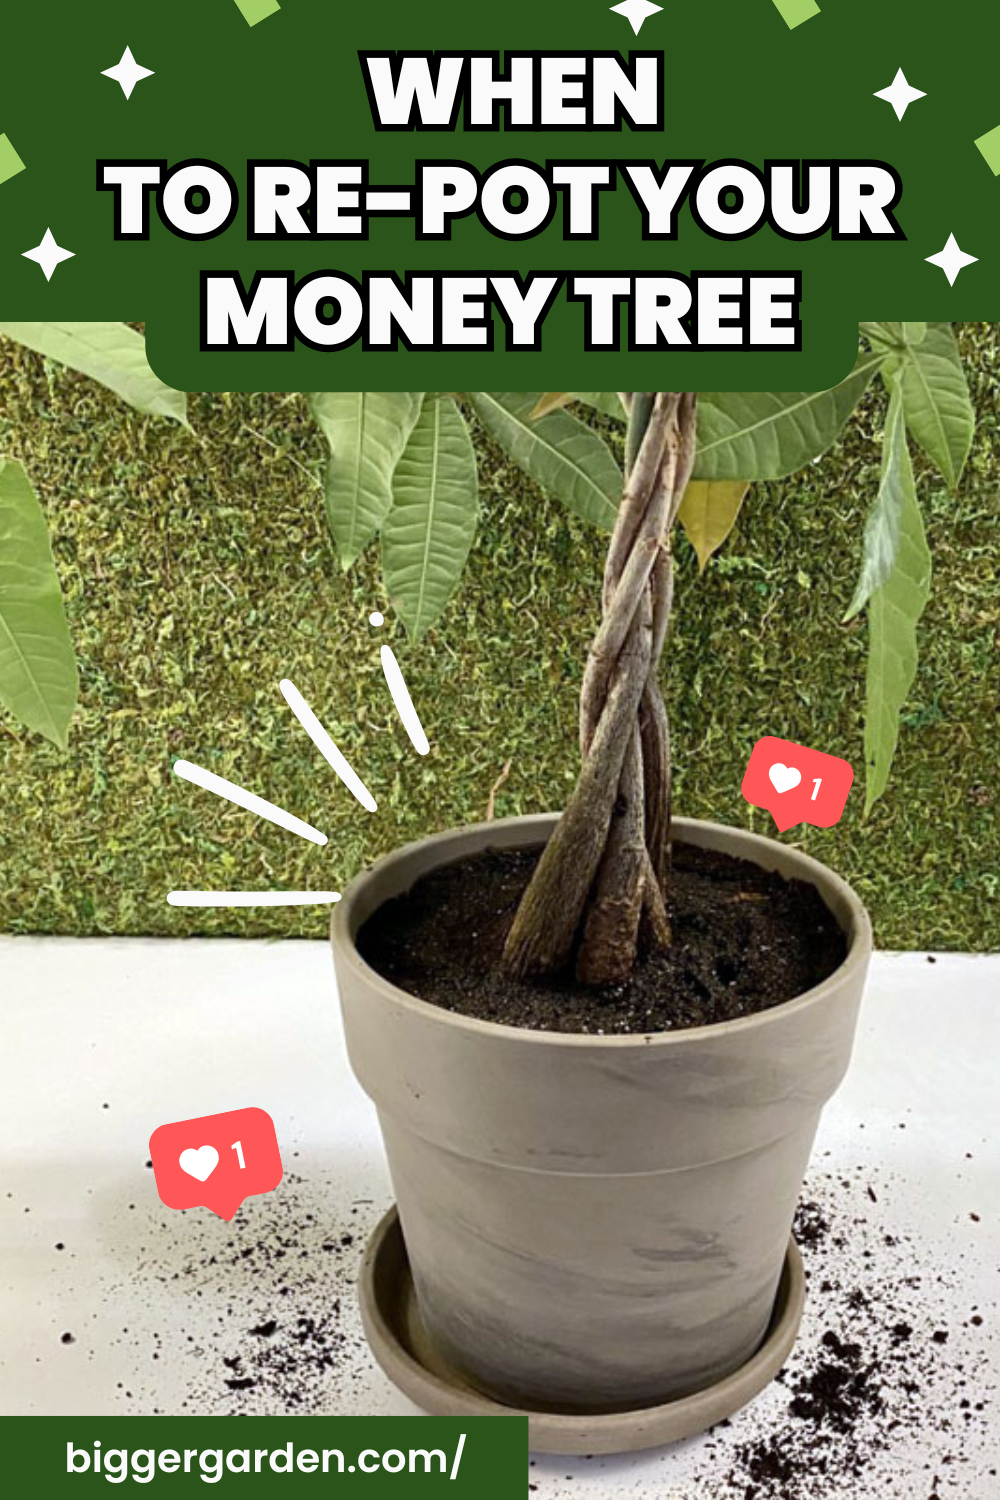 RE POT MONEY TREE